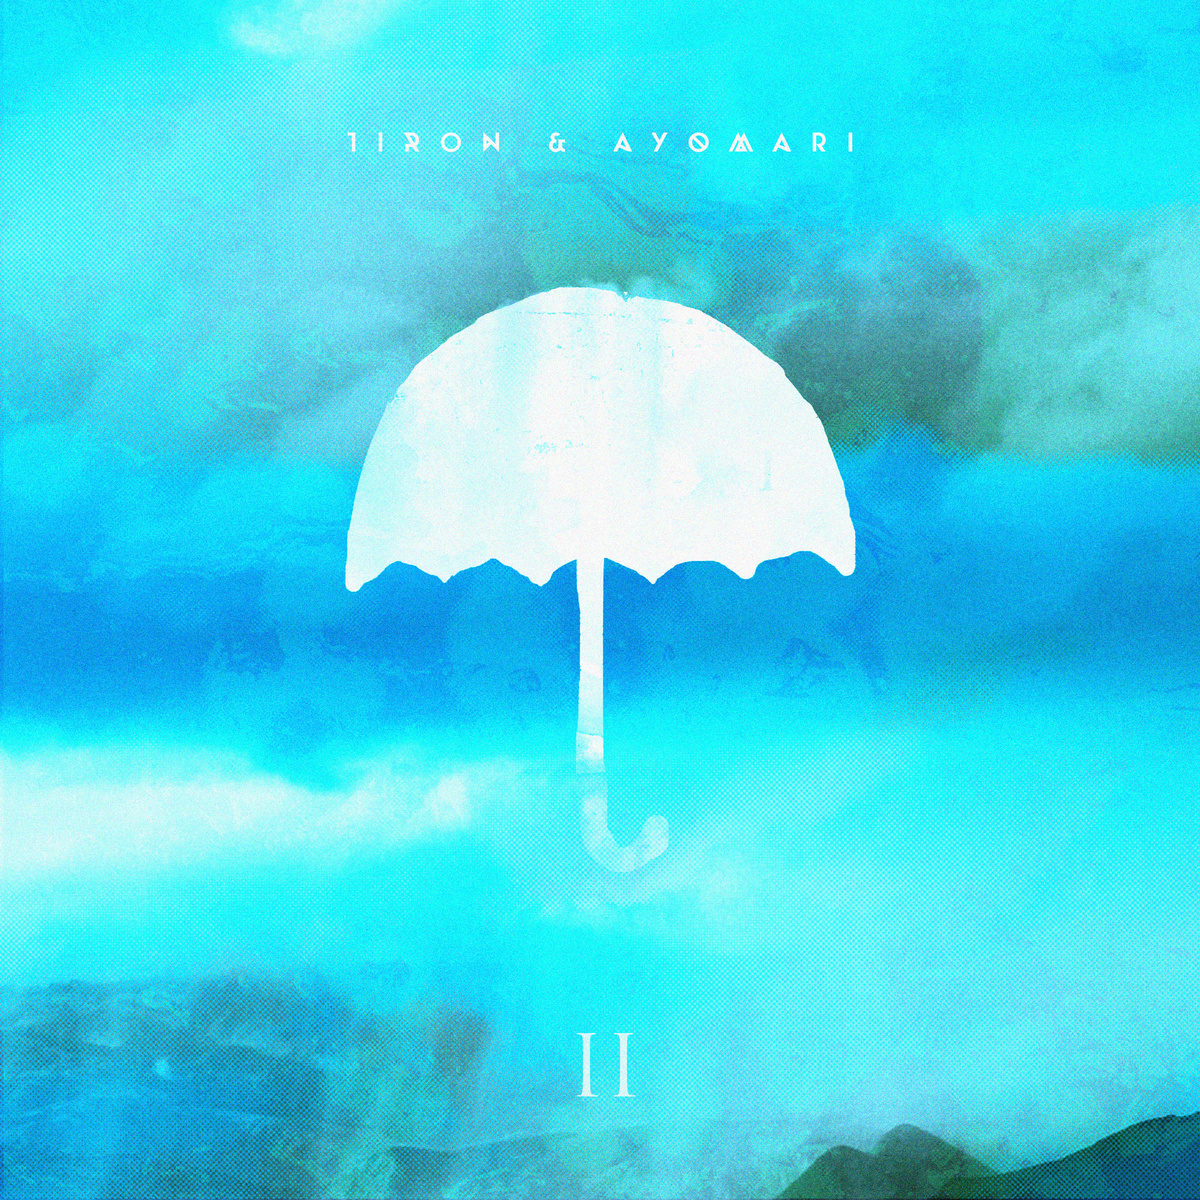 TiRon & Ayomari – The Wonderful Prelude Pt. 2 (EP)